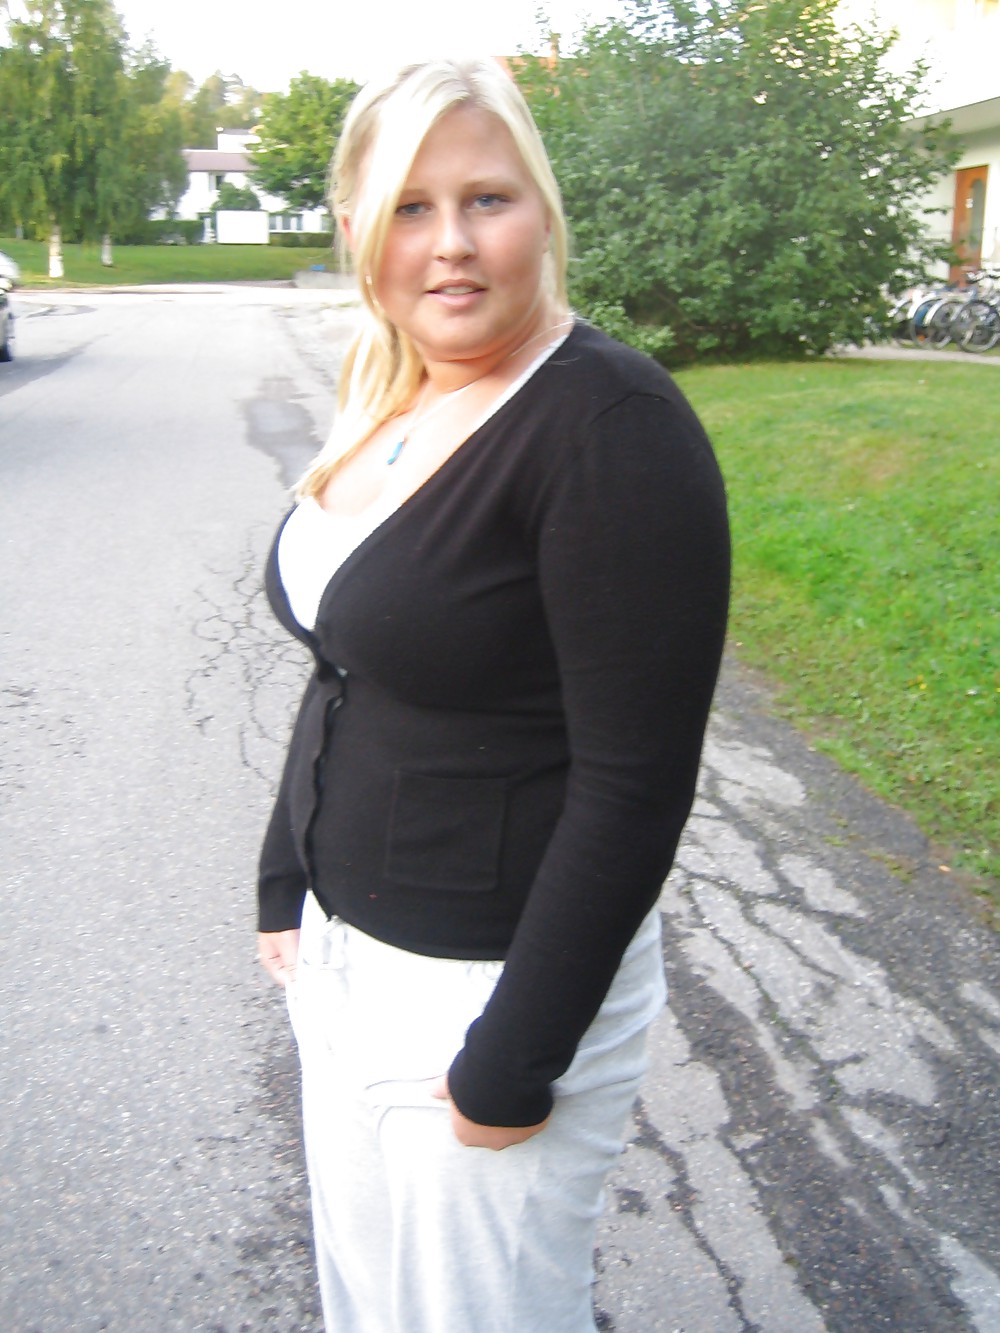 Chubby swedish girl #10373618